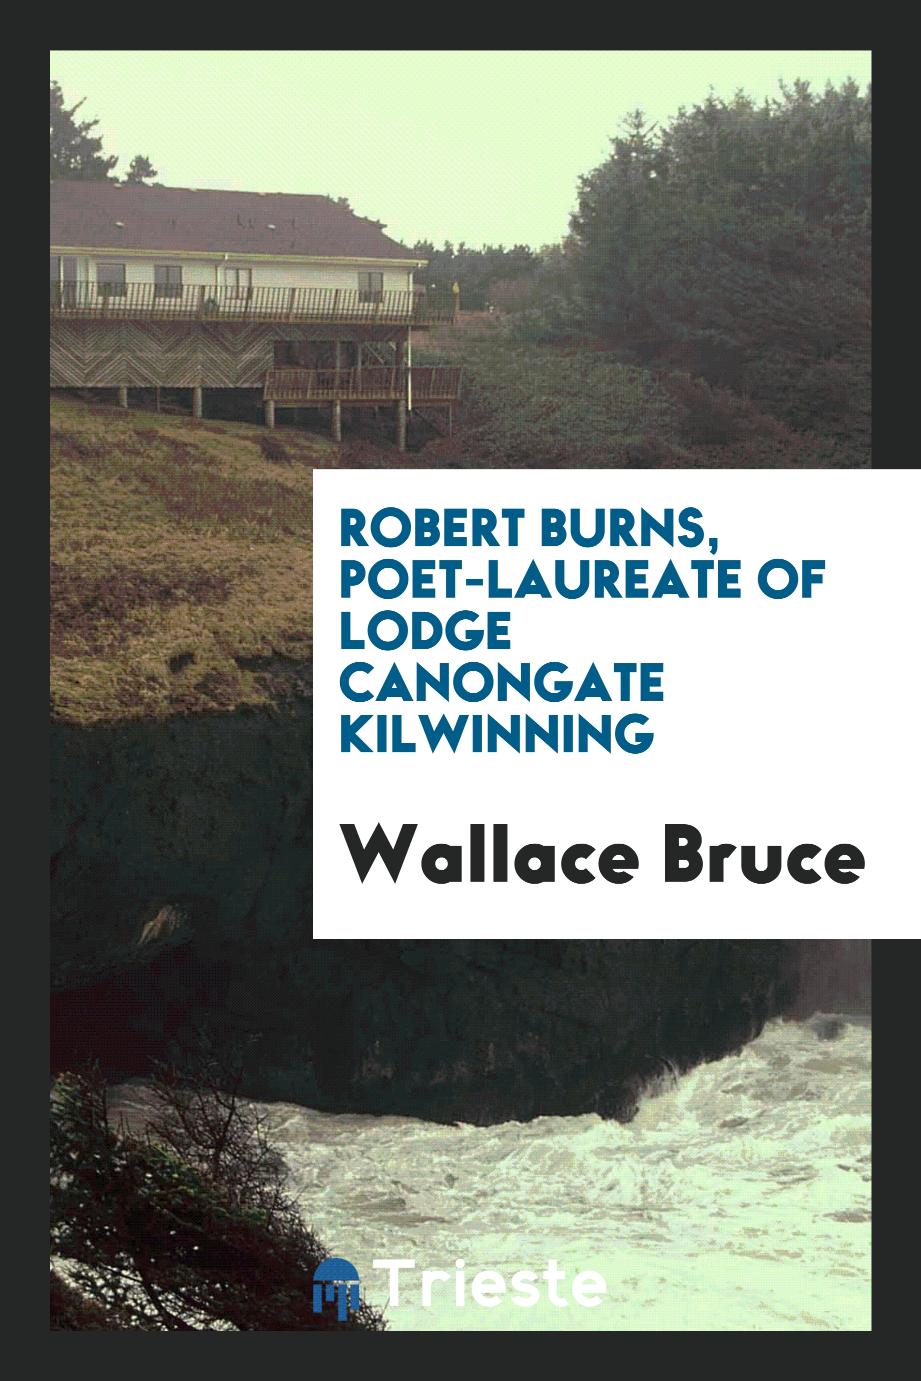 Robert Burns, poet-laureate of Lodge Canongate Kilwinning